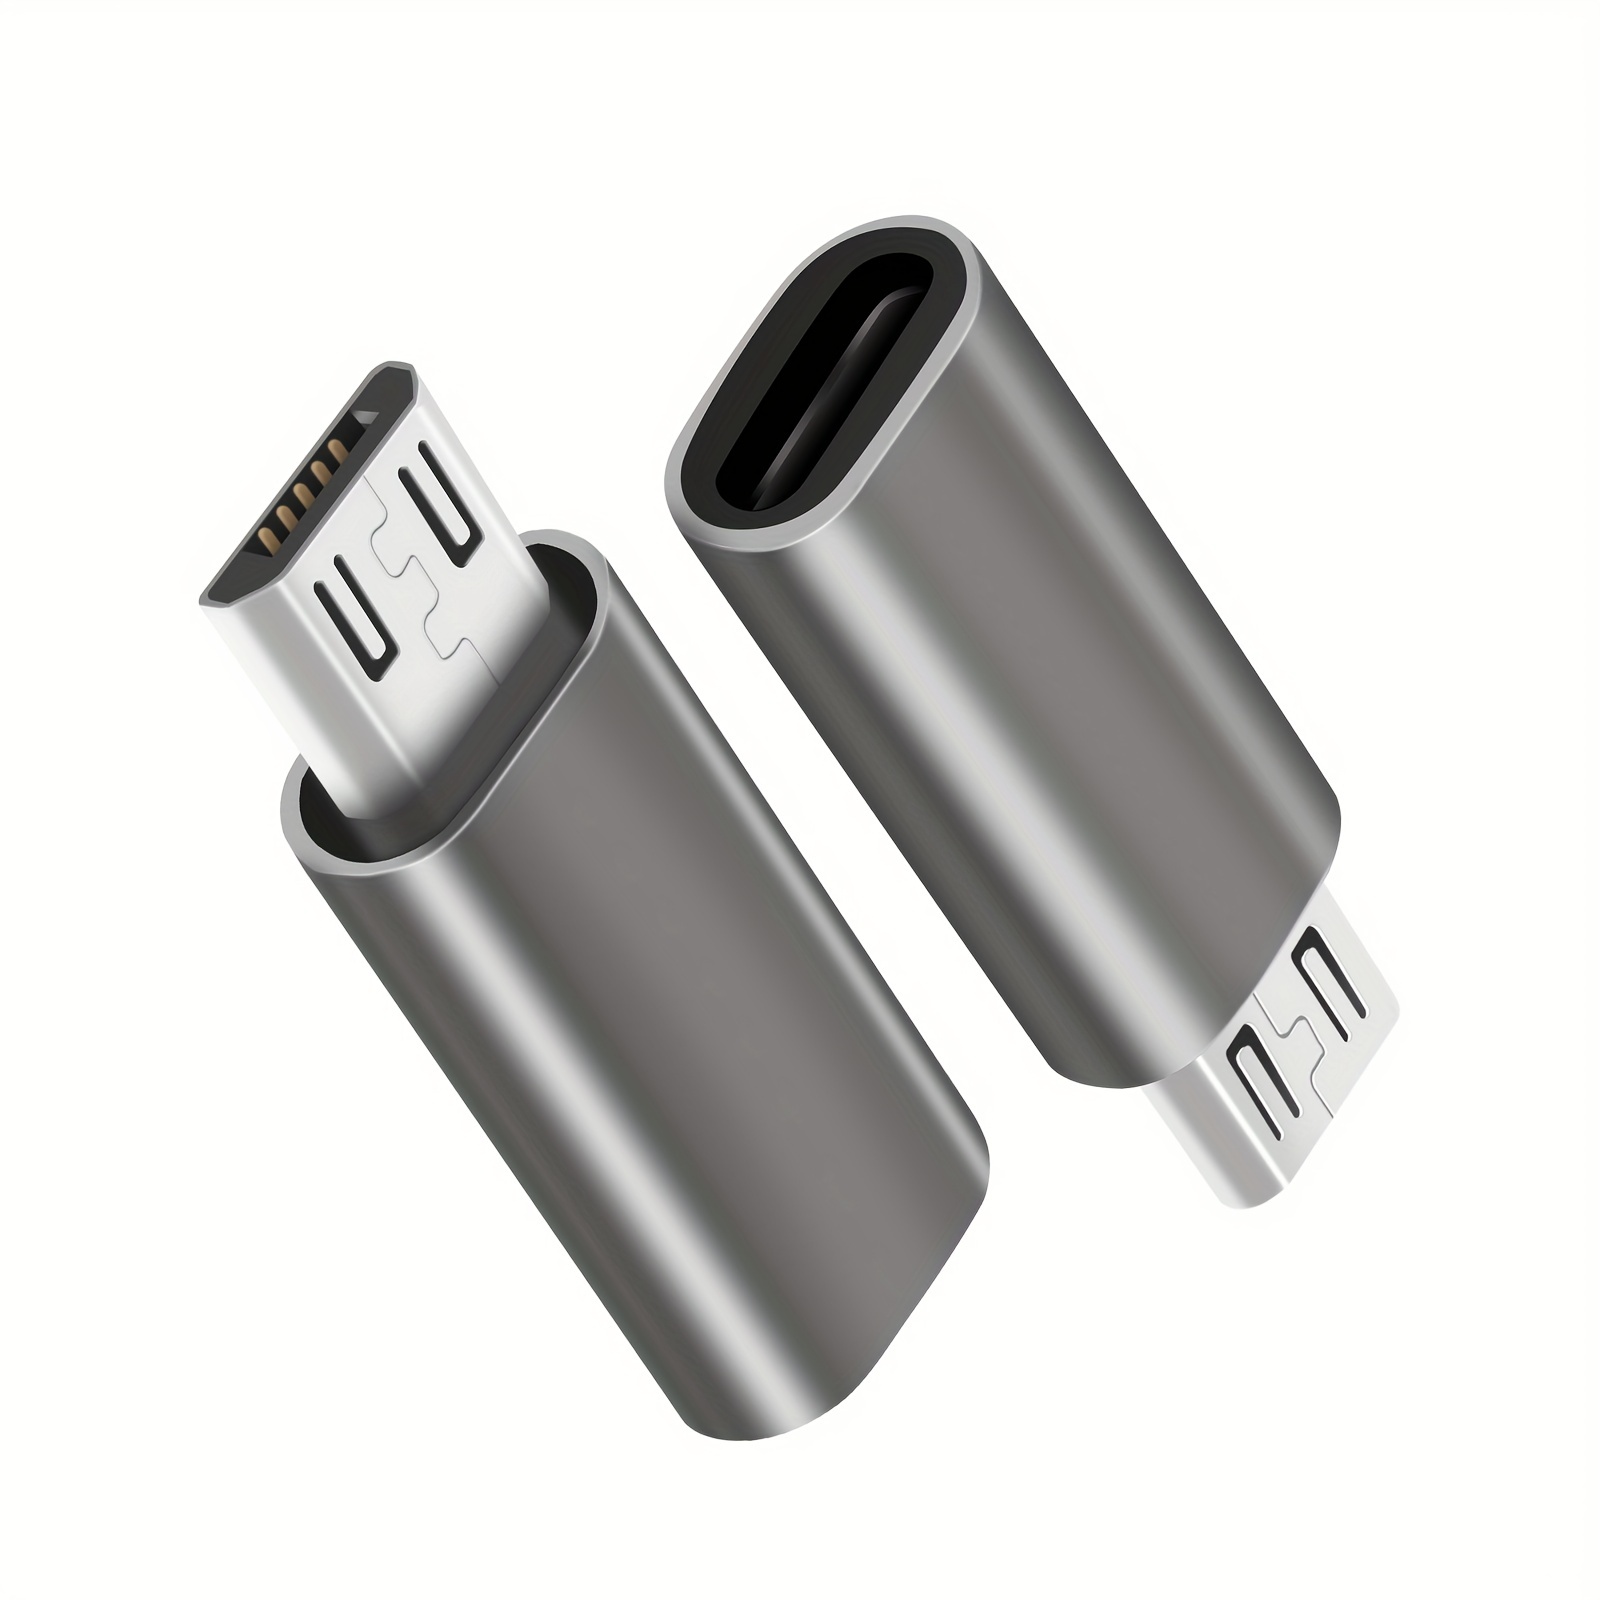  Adaptador USB C a Micro USB, paquete de 2 conectores tipo C  hembra a micro USB macho, compatible con carga y sincronización de datos,  compatible con dispositivos Samsung Galaxy S7 Edge